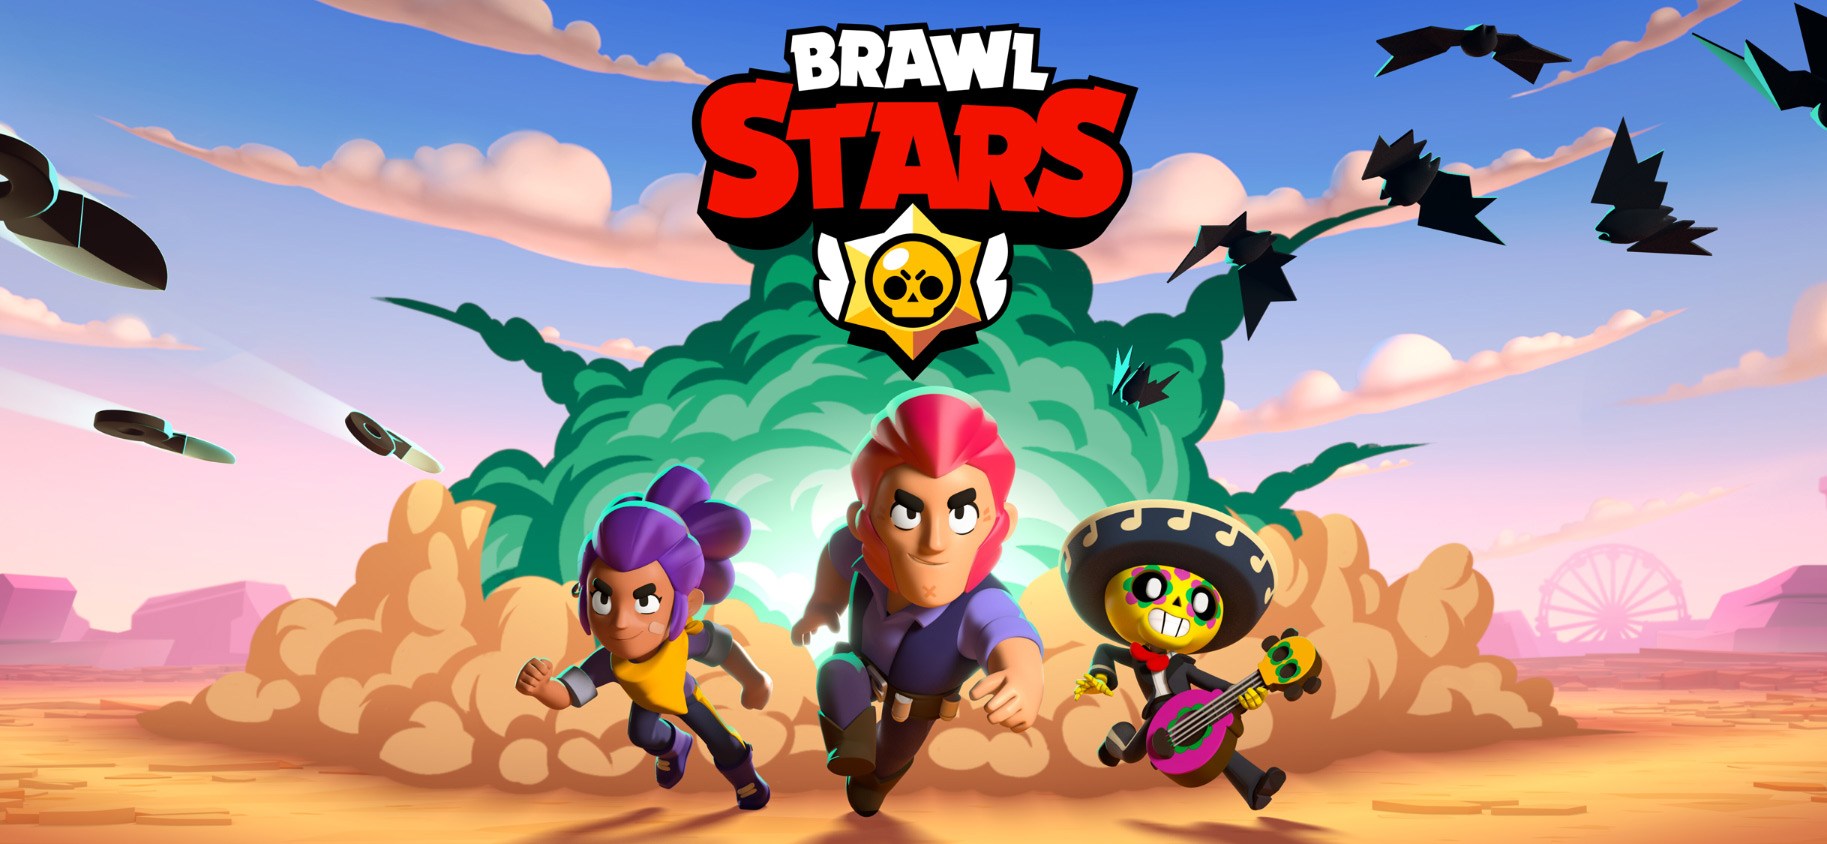 Brawl Stars gets a new update tomorrow and new brawler Gene soon